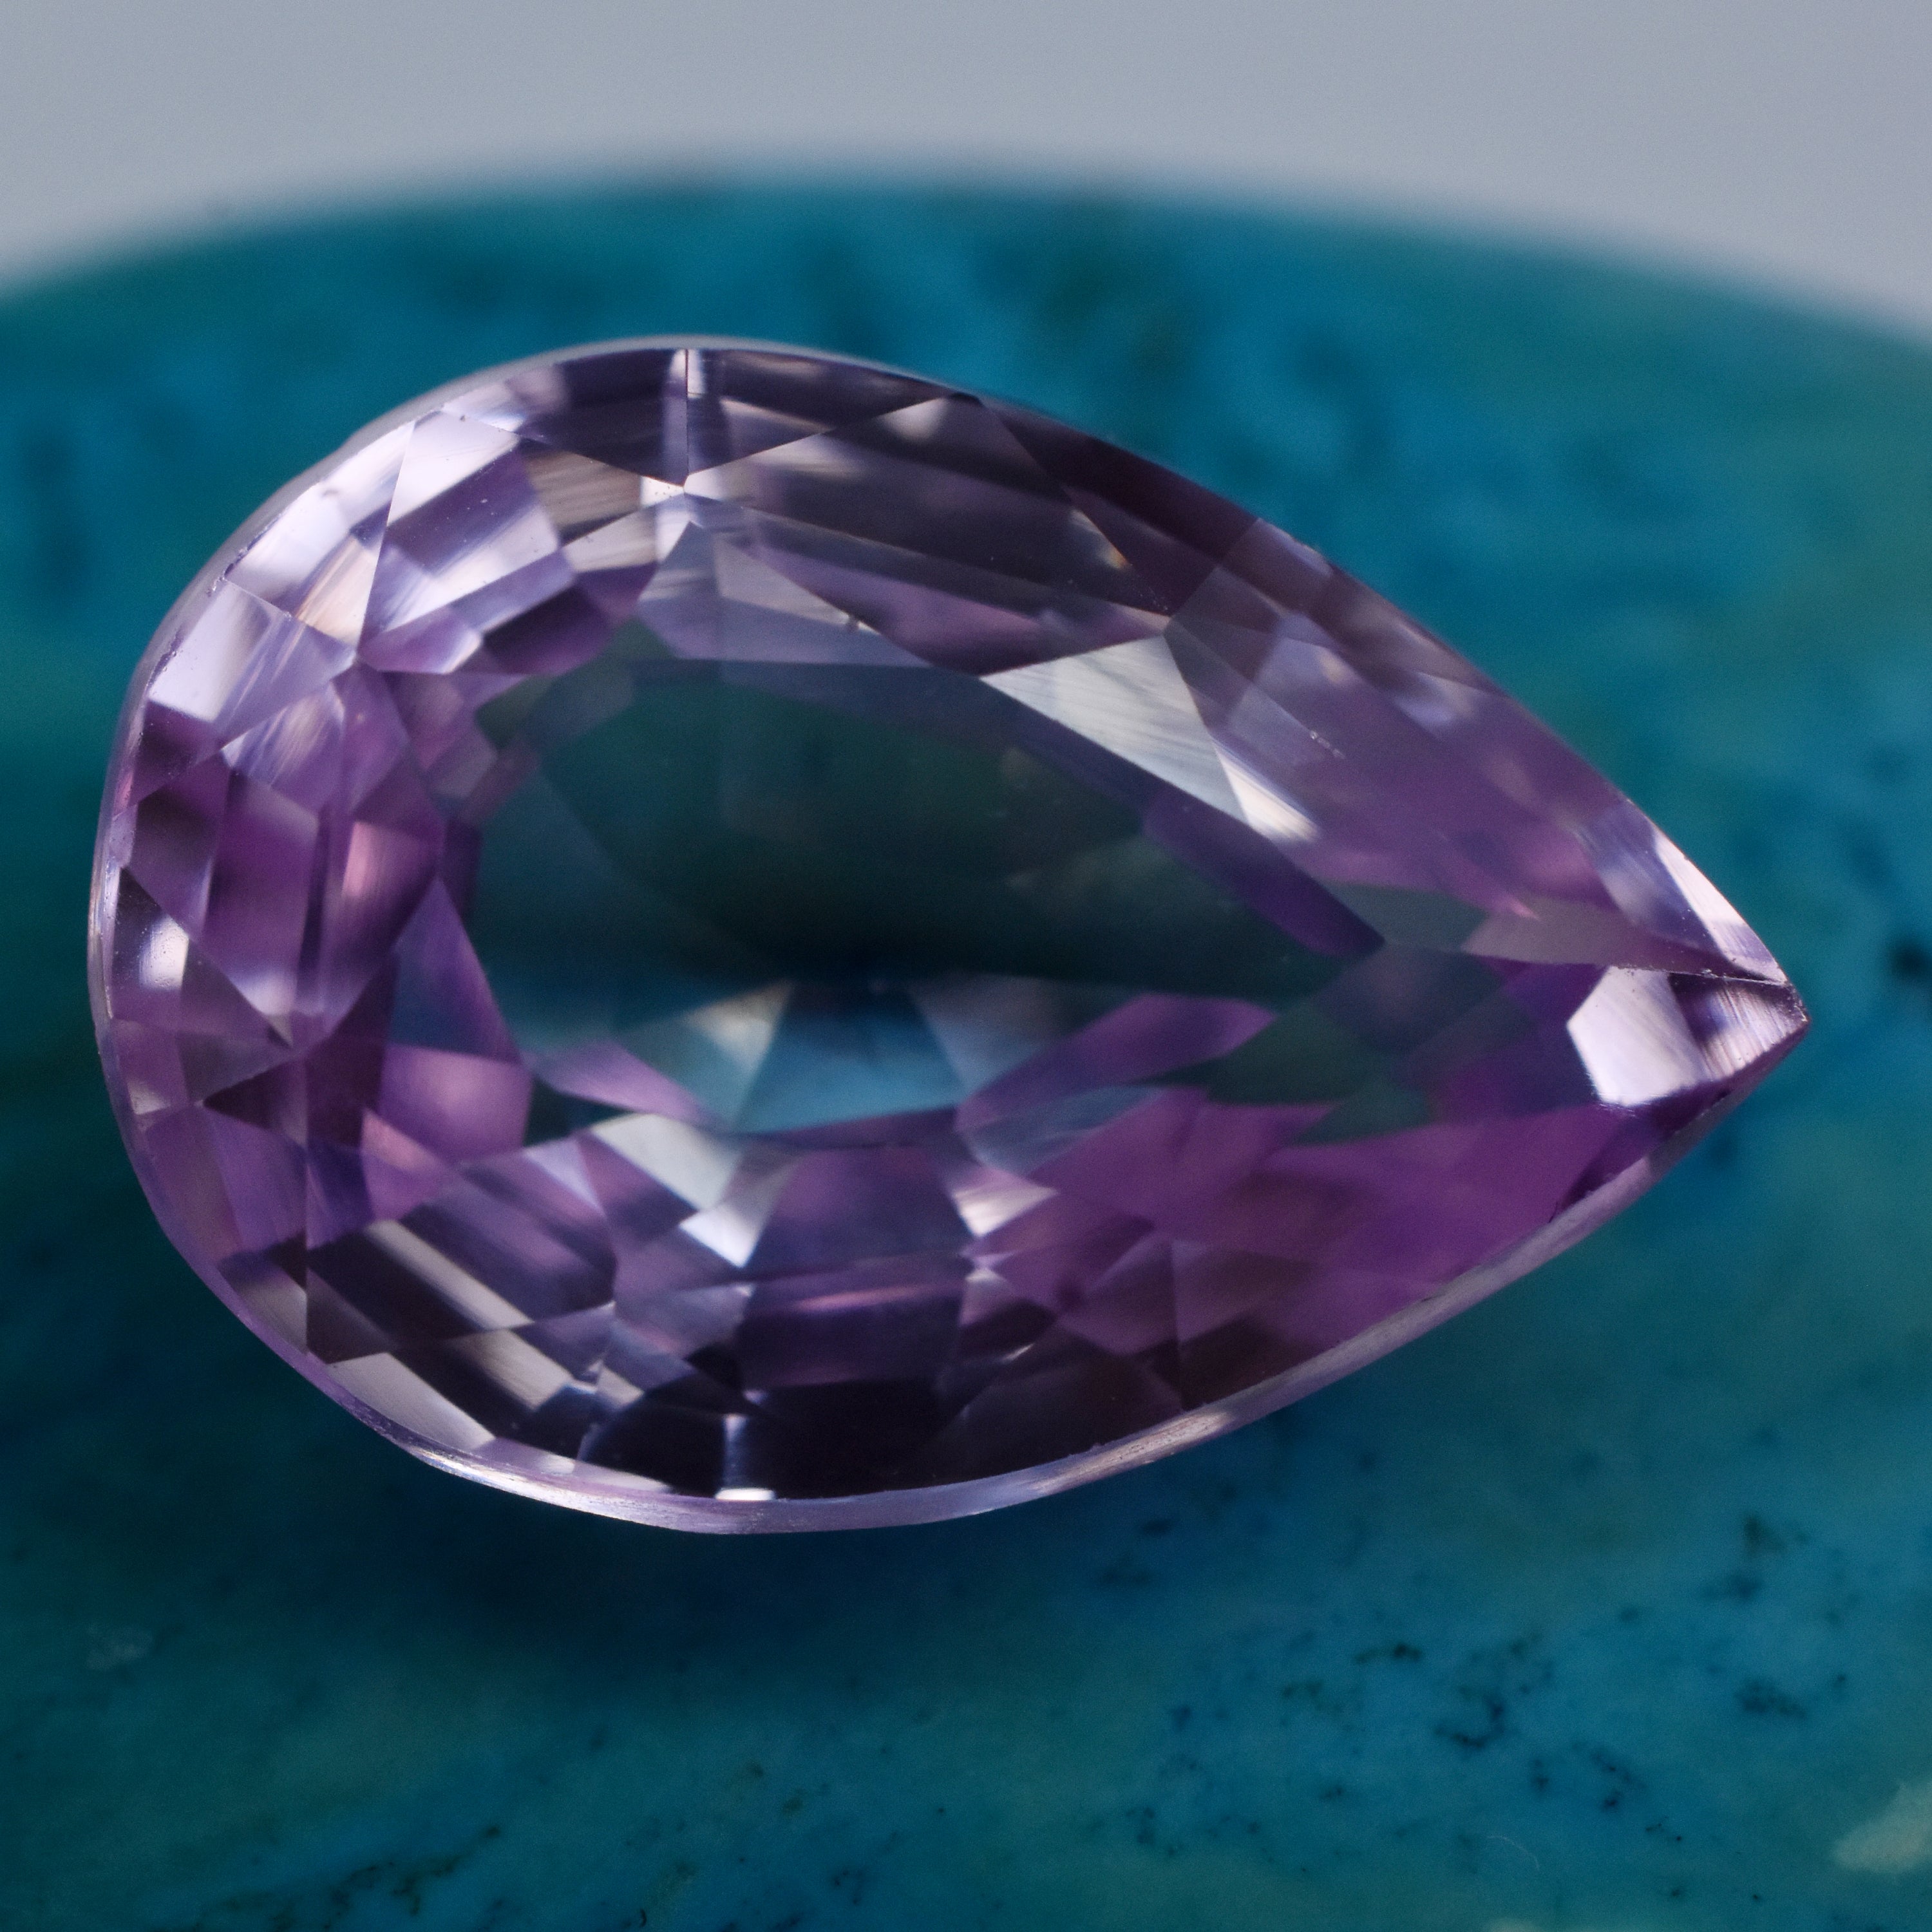 Beautiful Sapphire Gemstone From Sri-Lanka 10.25 Carat Pear Cut Natural Sapphire Pink Certified Loose Gemstone Pendant Size Sapphire